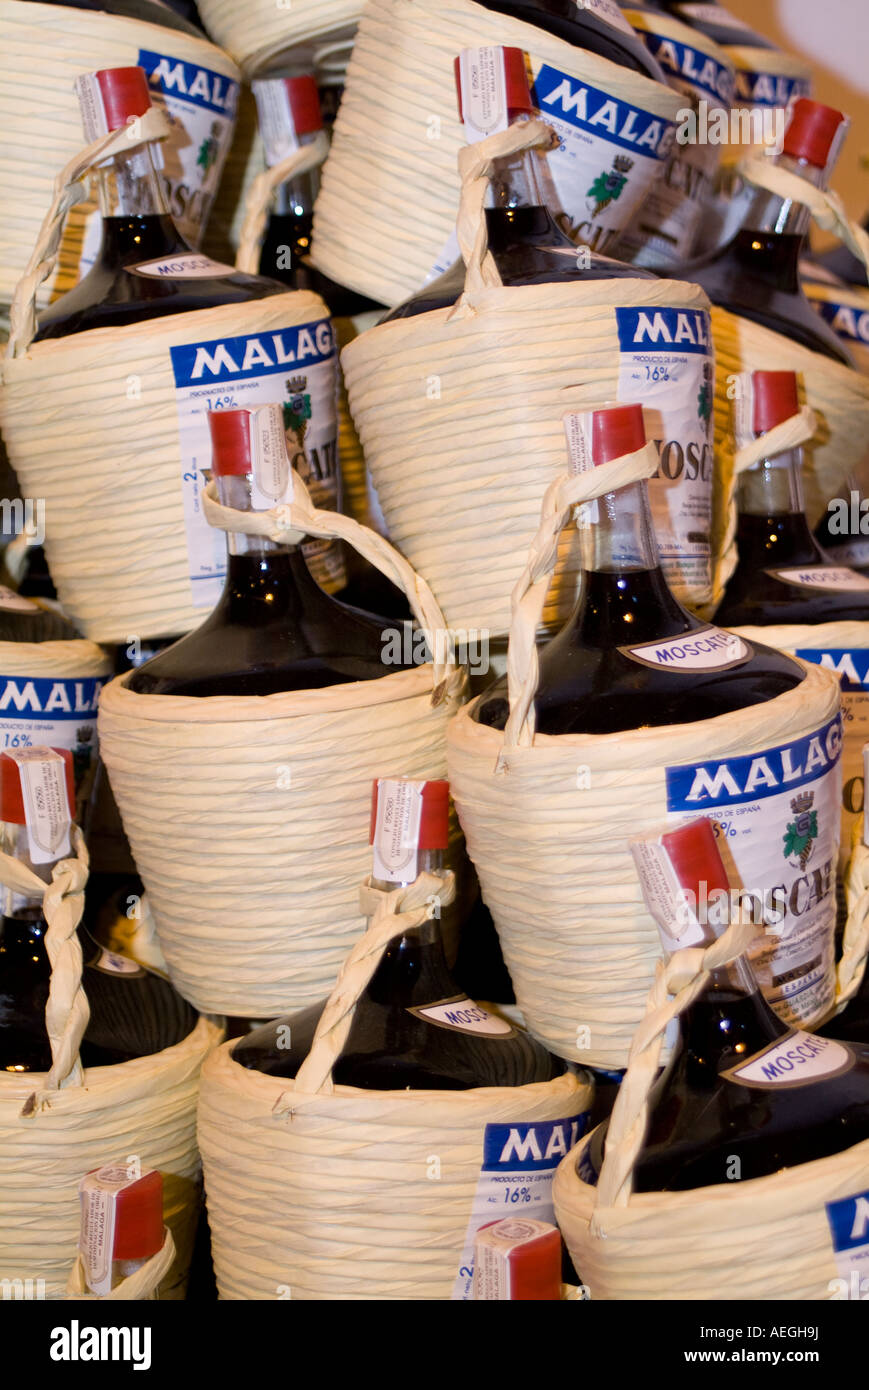 Malaga Dulce, Malaga Sweet Wine, bottles in typical baskets Stock Photo